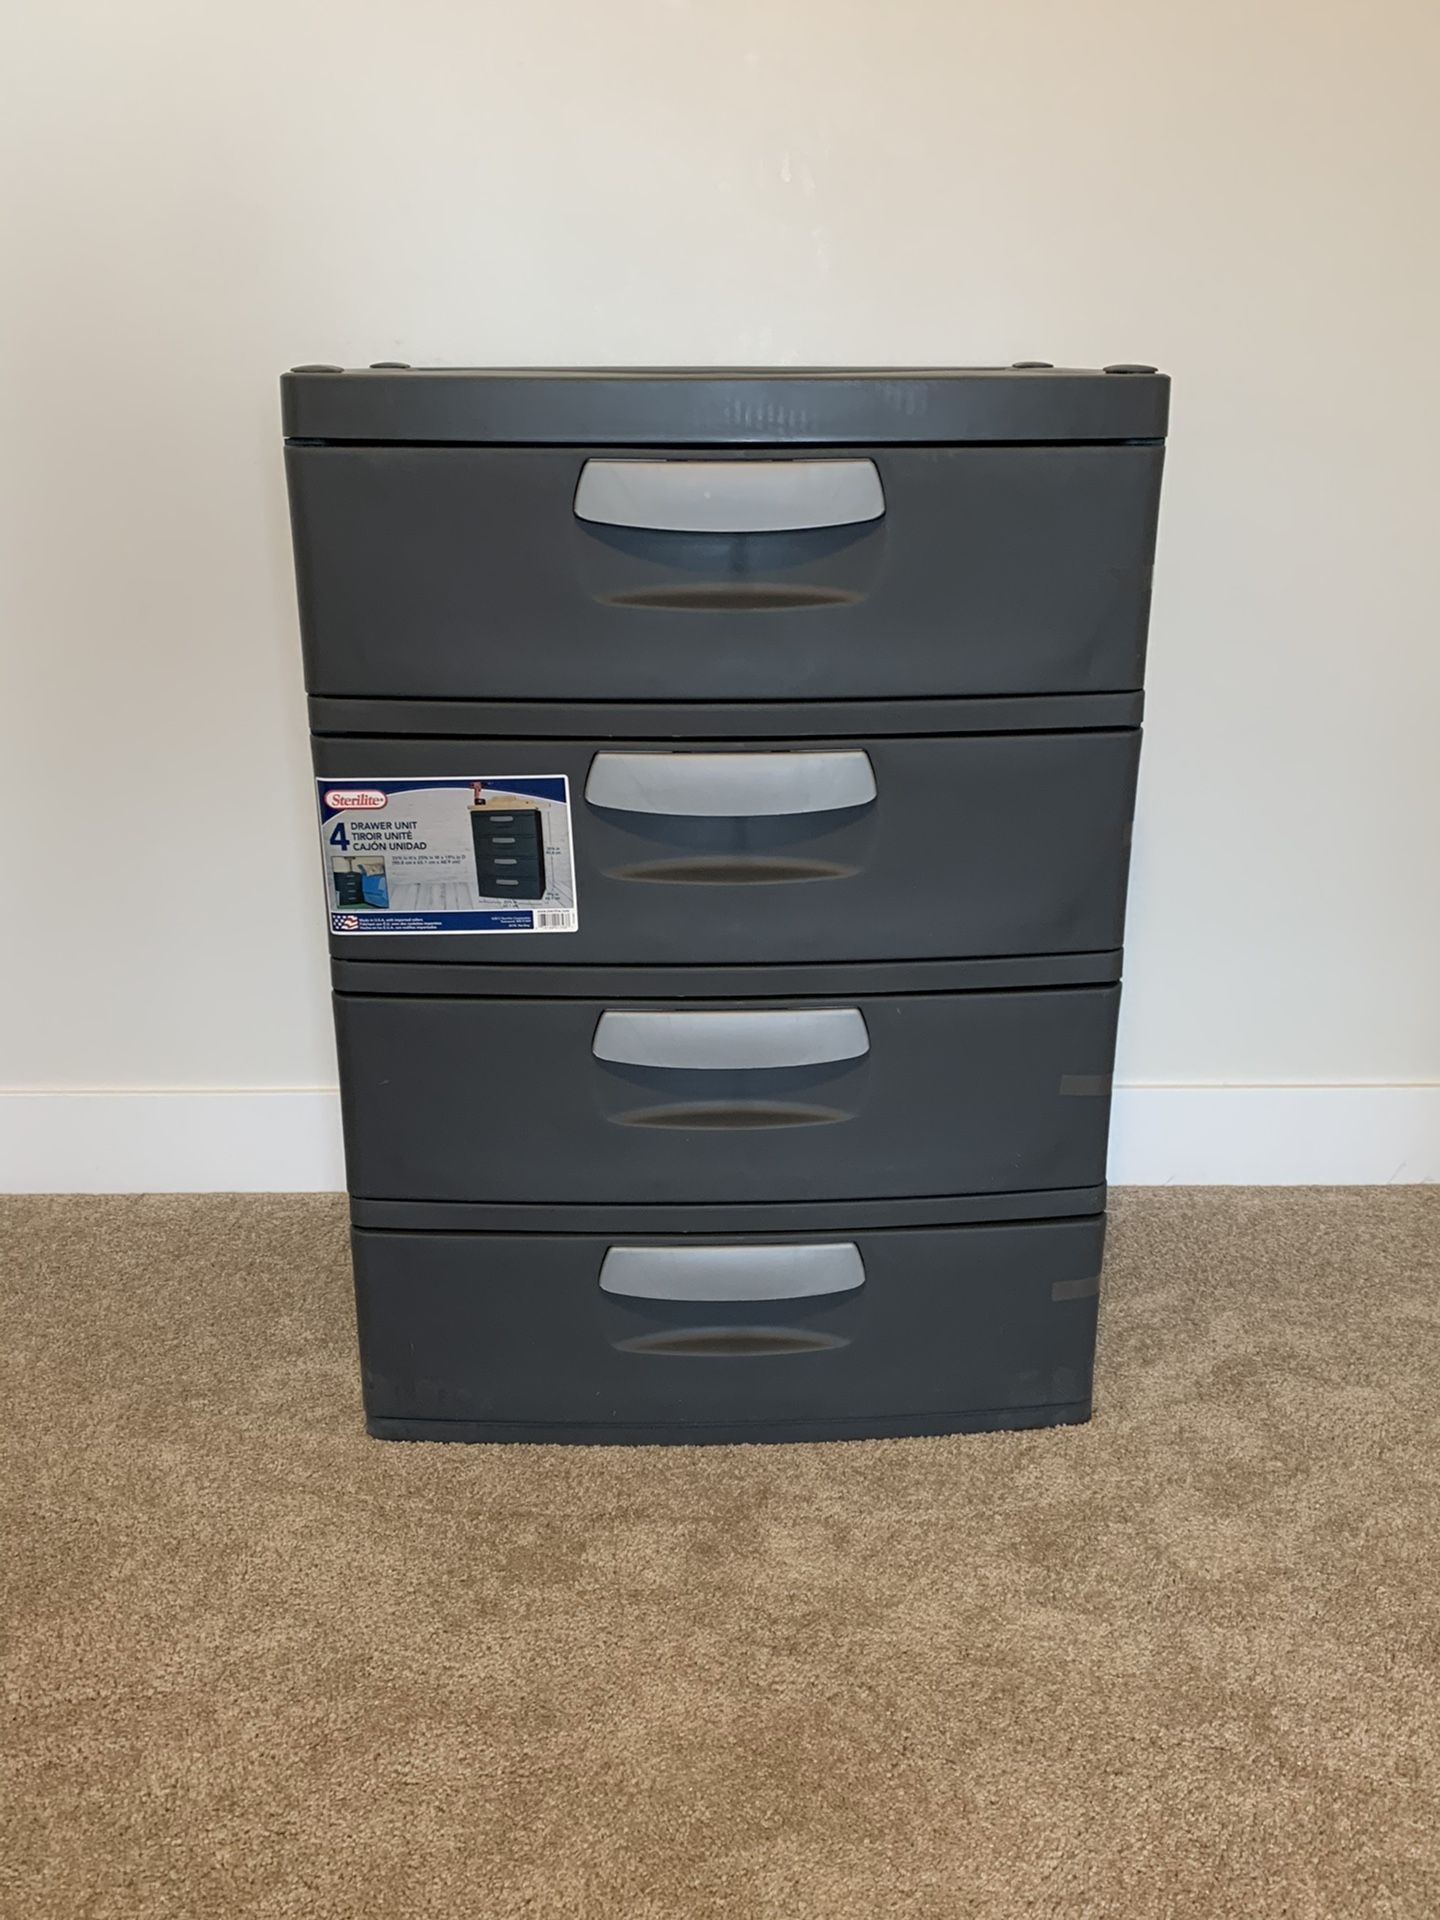 Storage unit/drawers